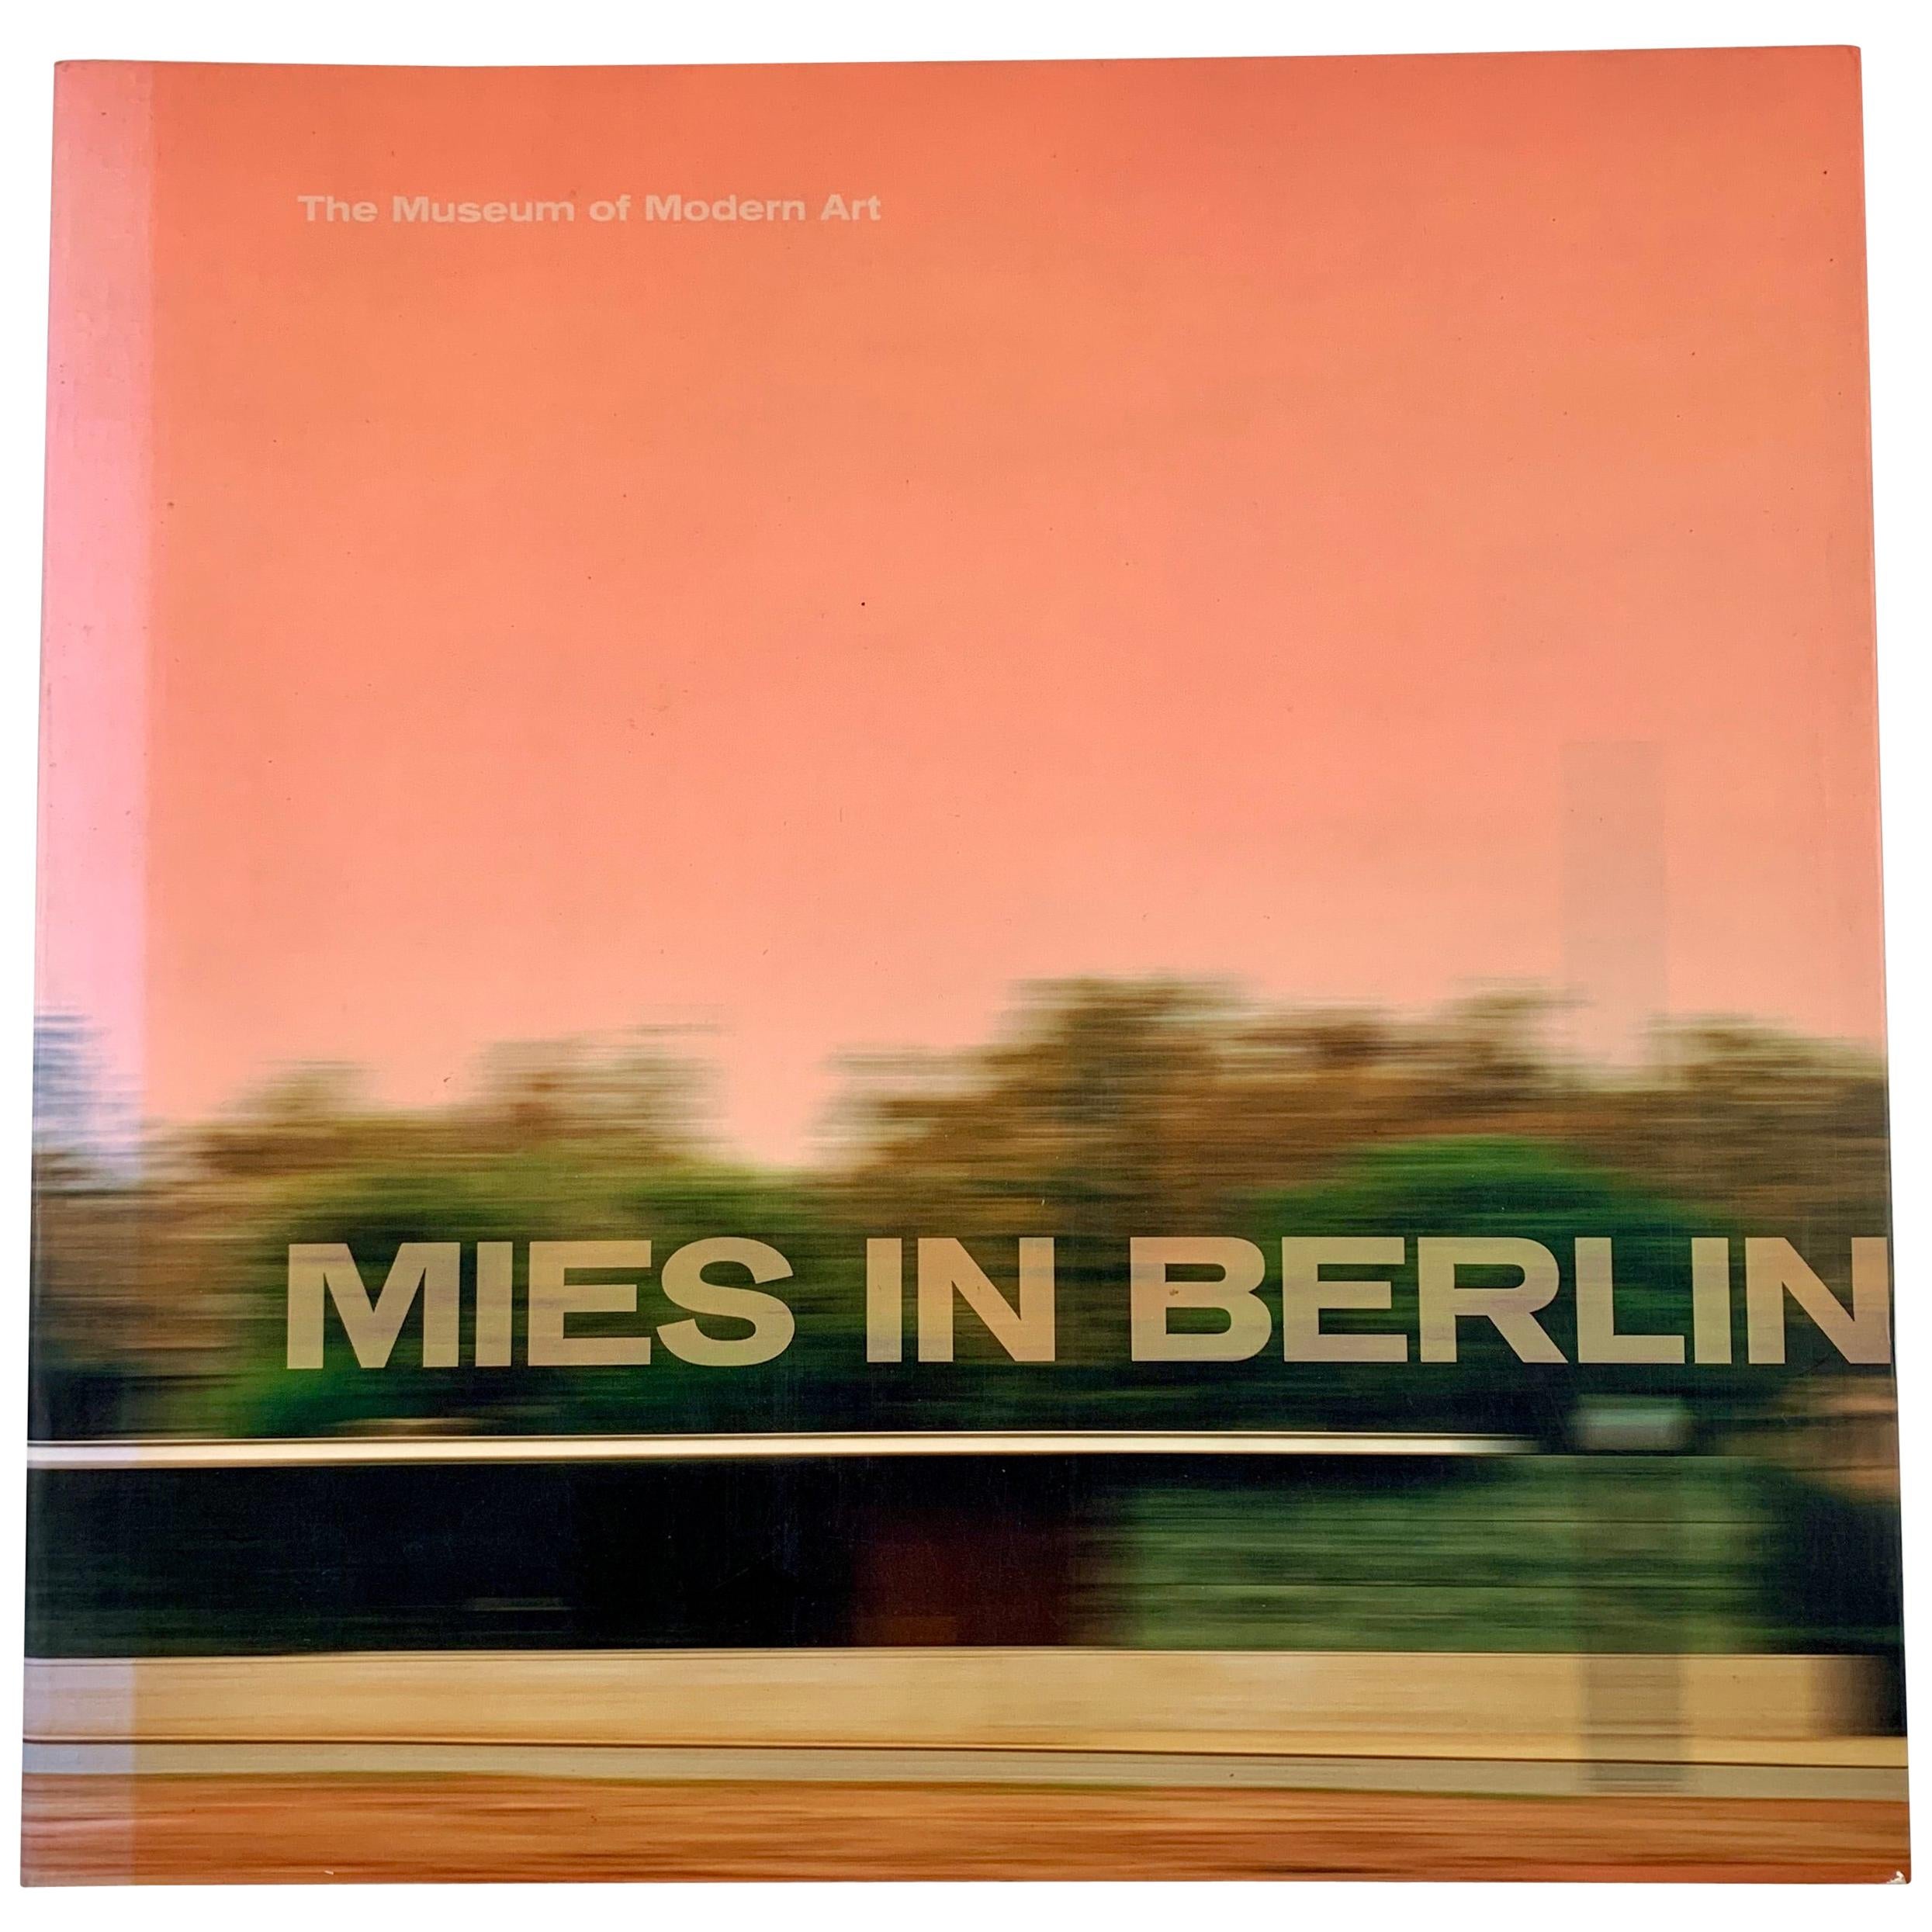 Mies in Berlin, MOMA Exhibit, Mies van der Rohe Bauhaus Modern Architecture Book